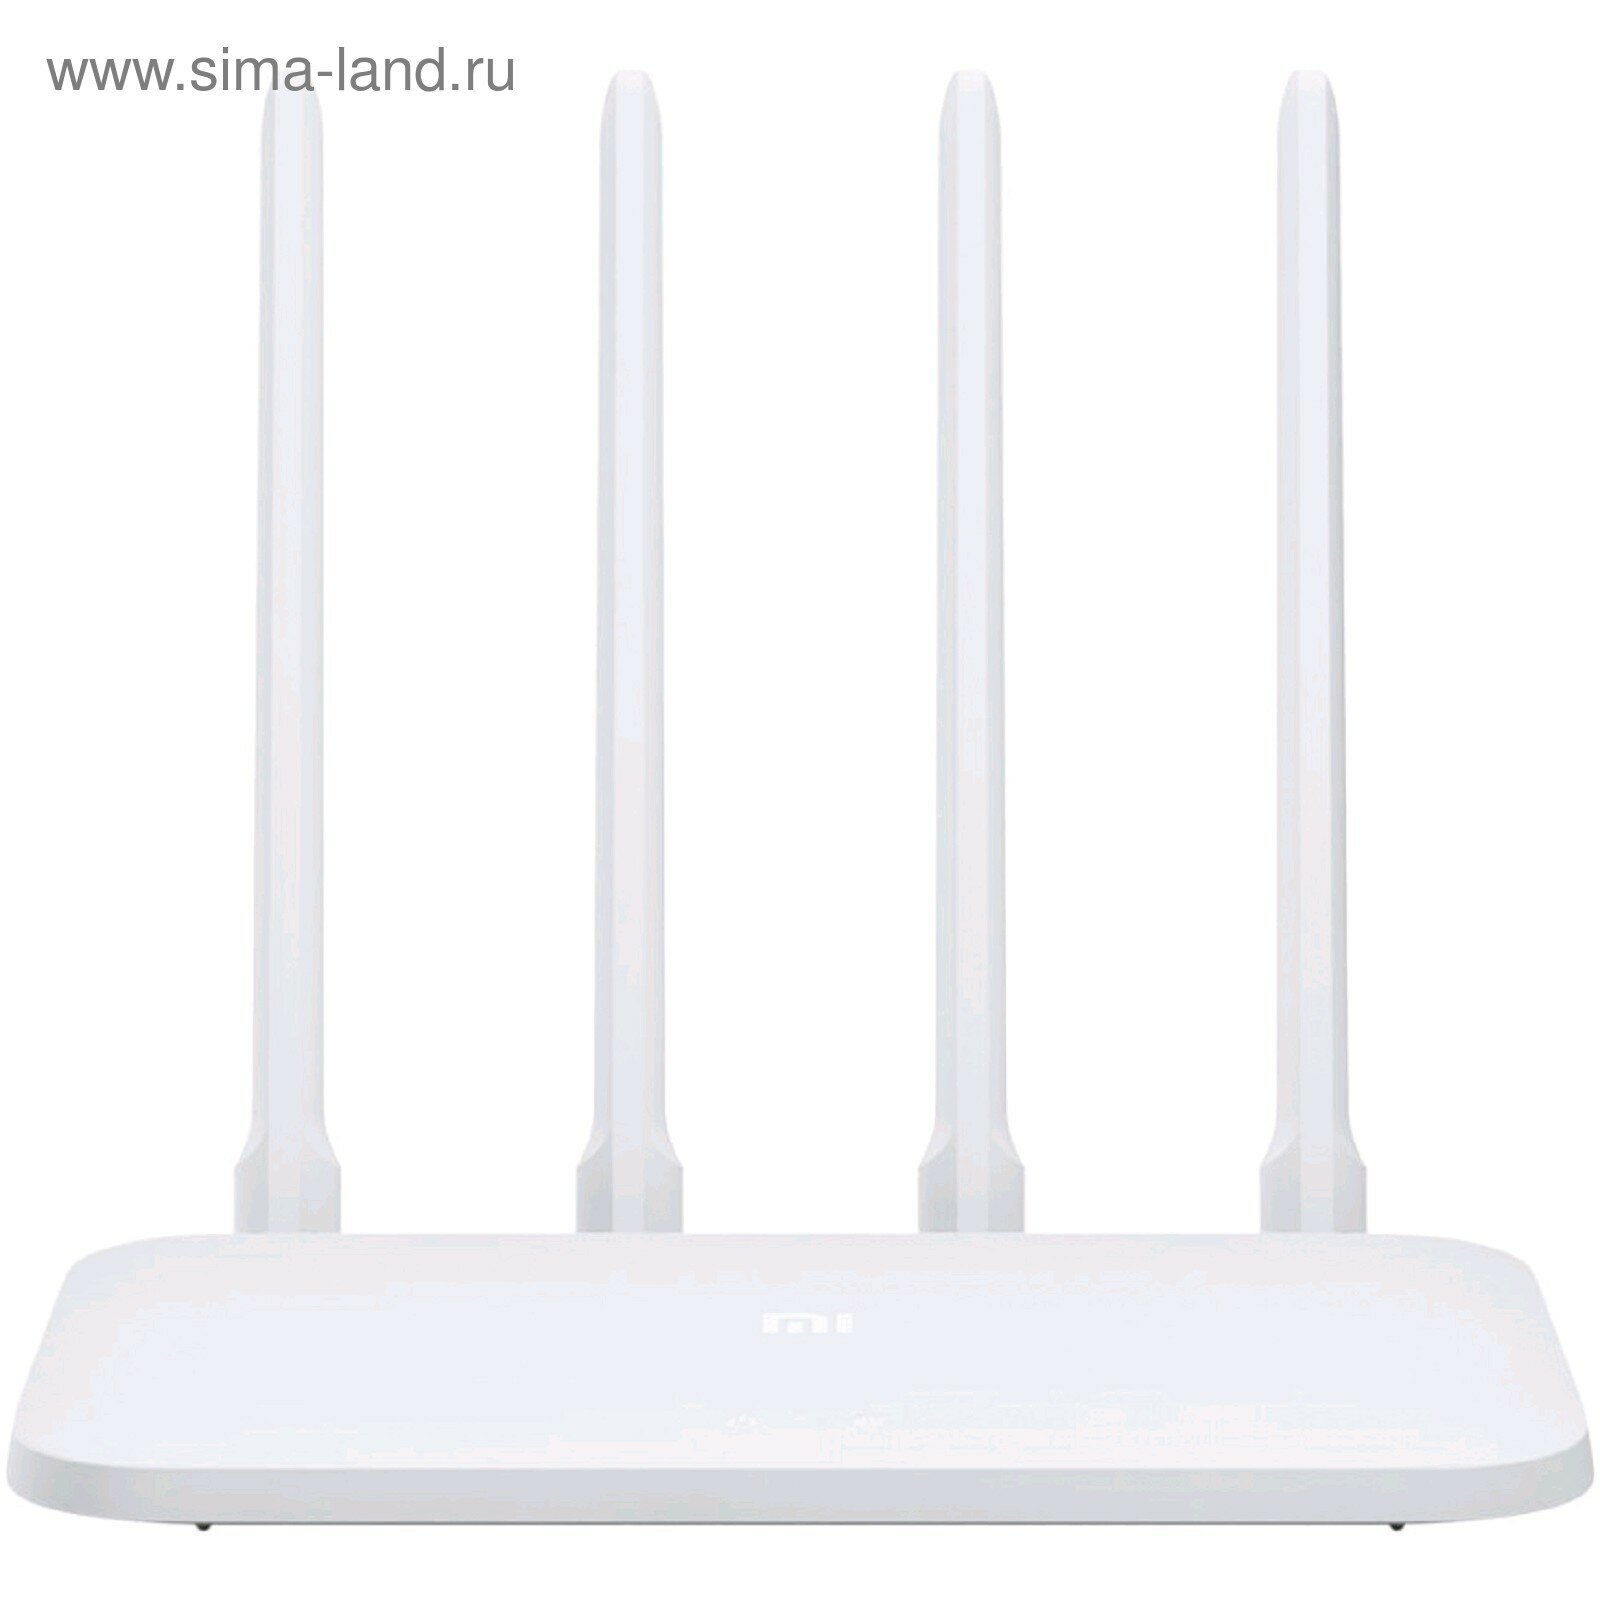 Wi-Fi роутер беспроводной Mi WiFi Router 4C (4C), 10/100 Мбит, белый